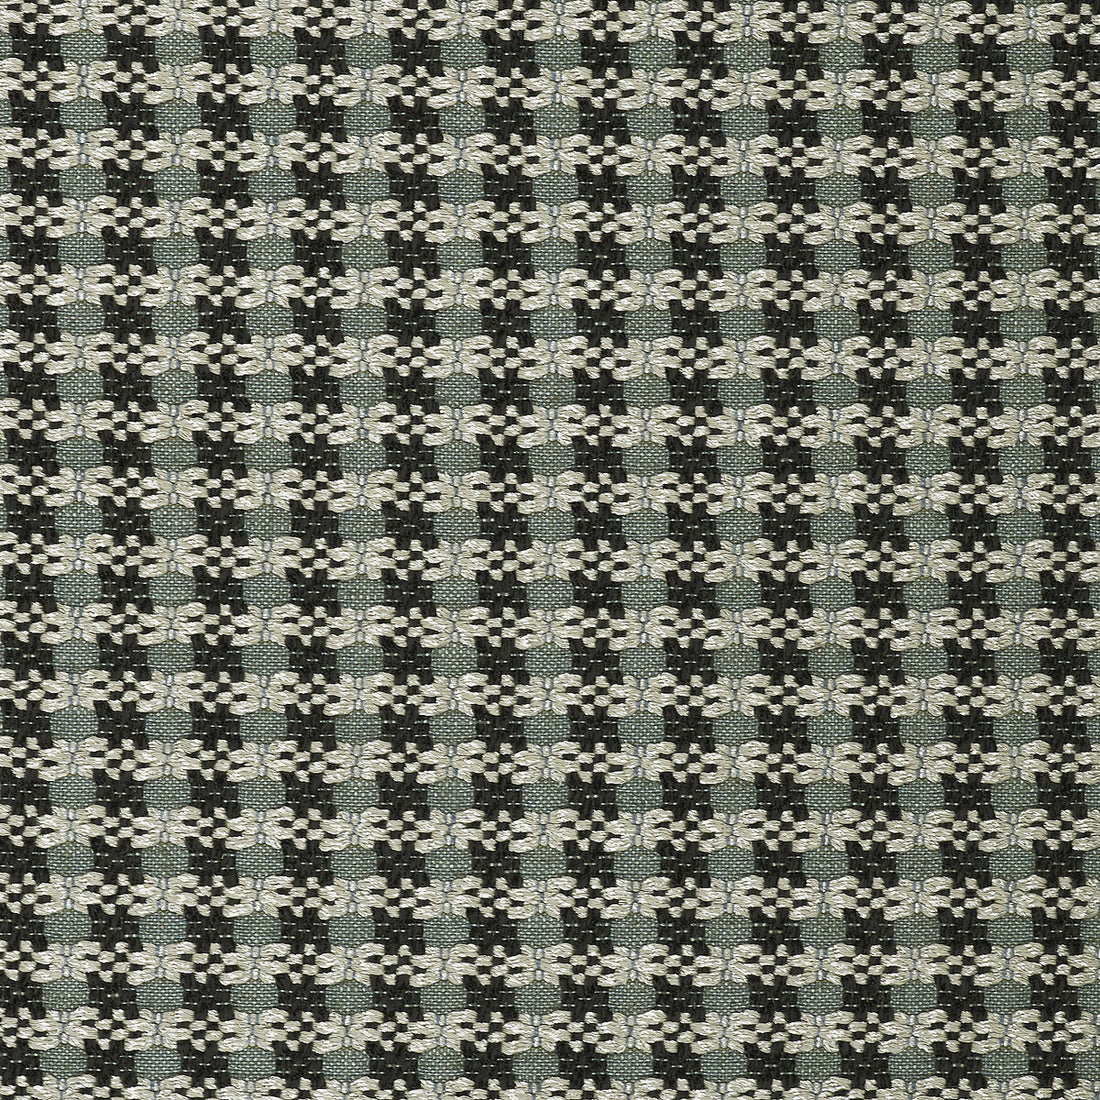 Bermudo fabric in agua color - pattern LCT1005.003.0 - by Gaston y Daniela in the Lorenzo Castillo V collection